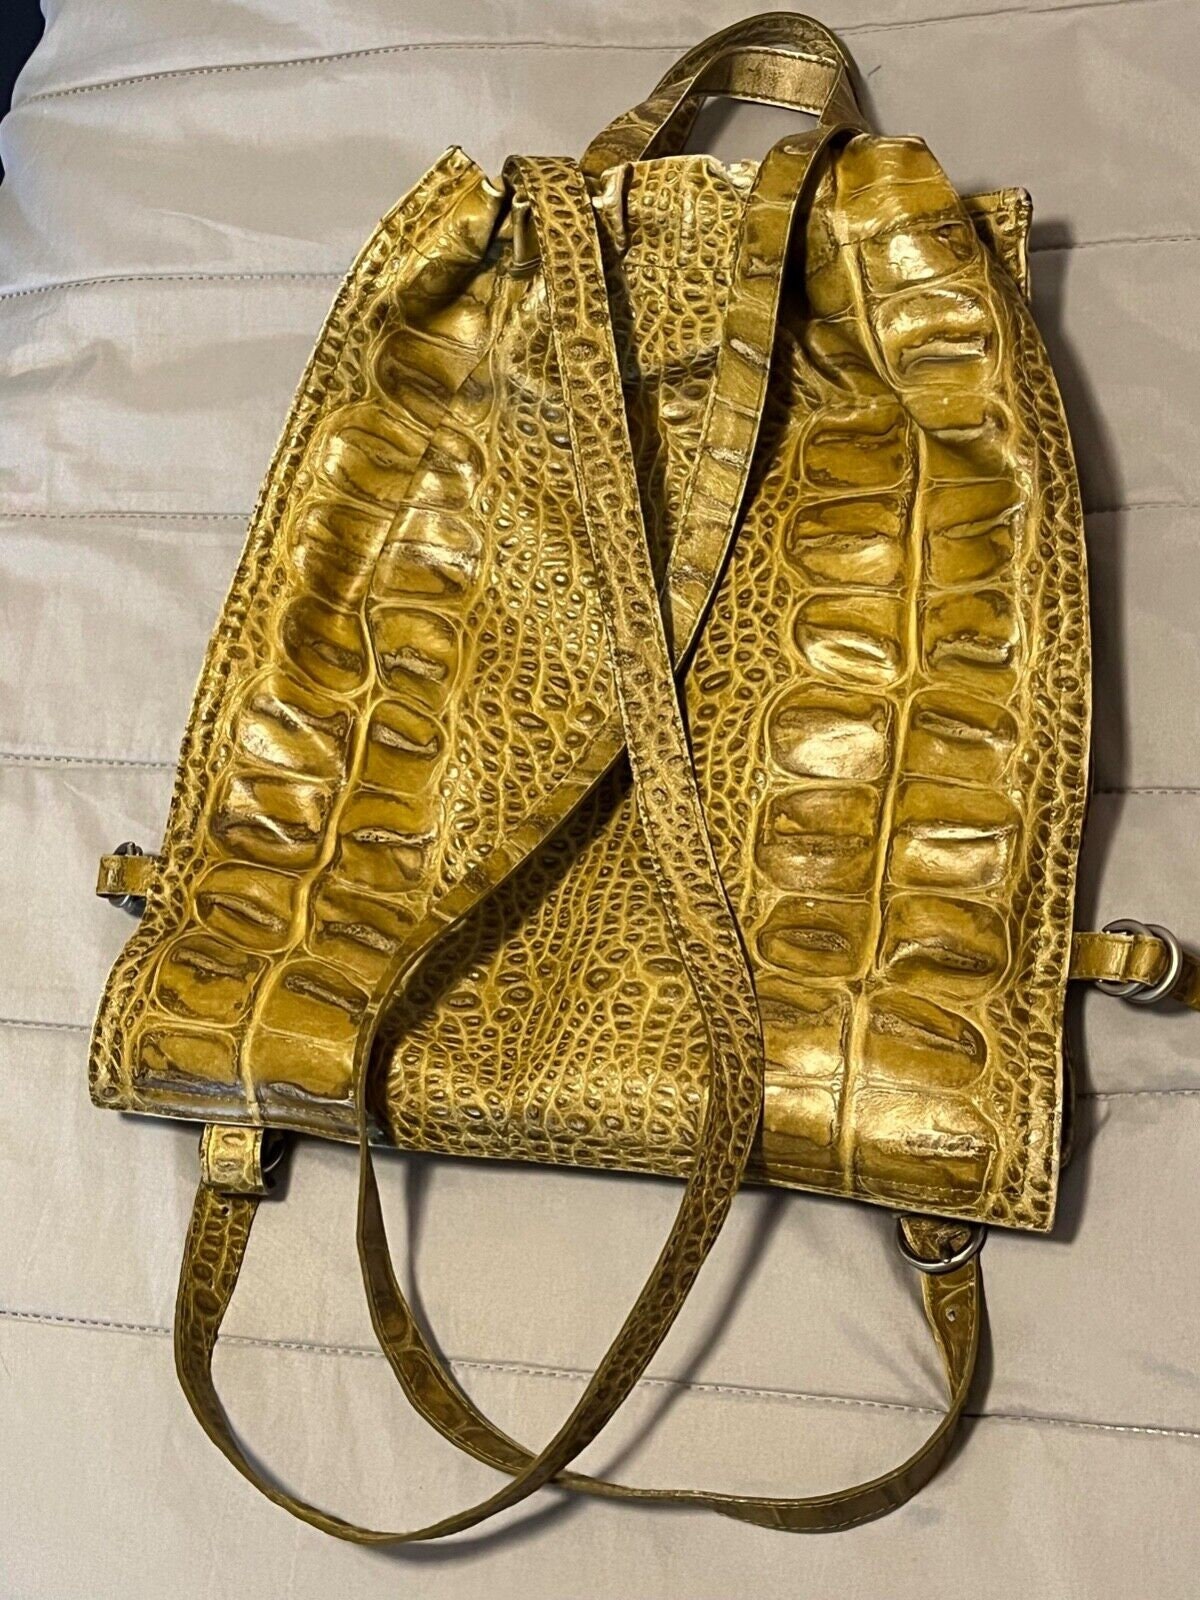 $39,000 Pseudo-School Sacks : alligator backpack